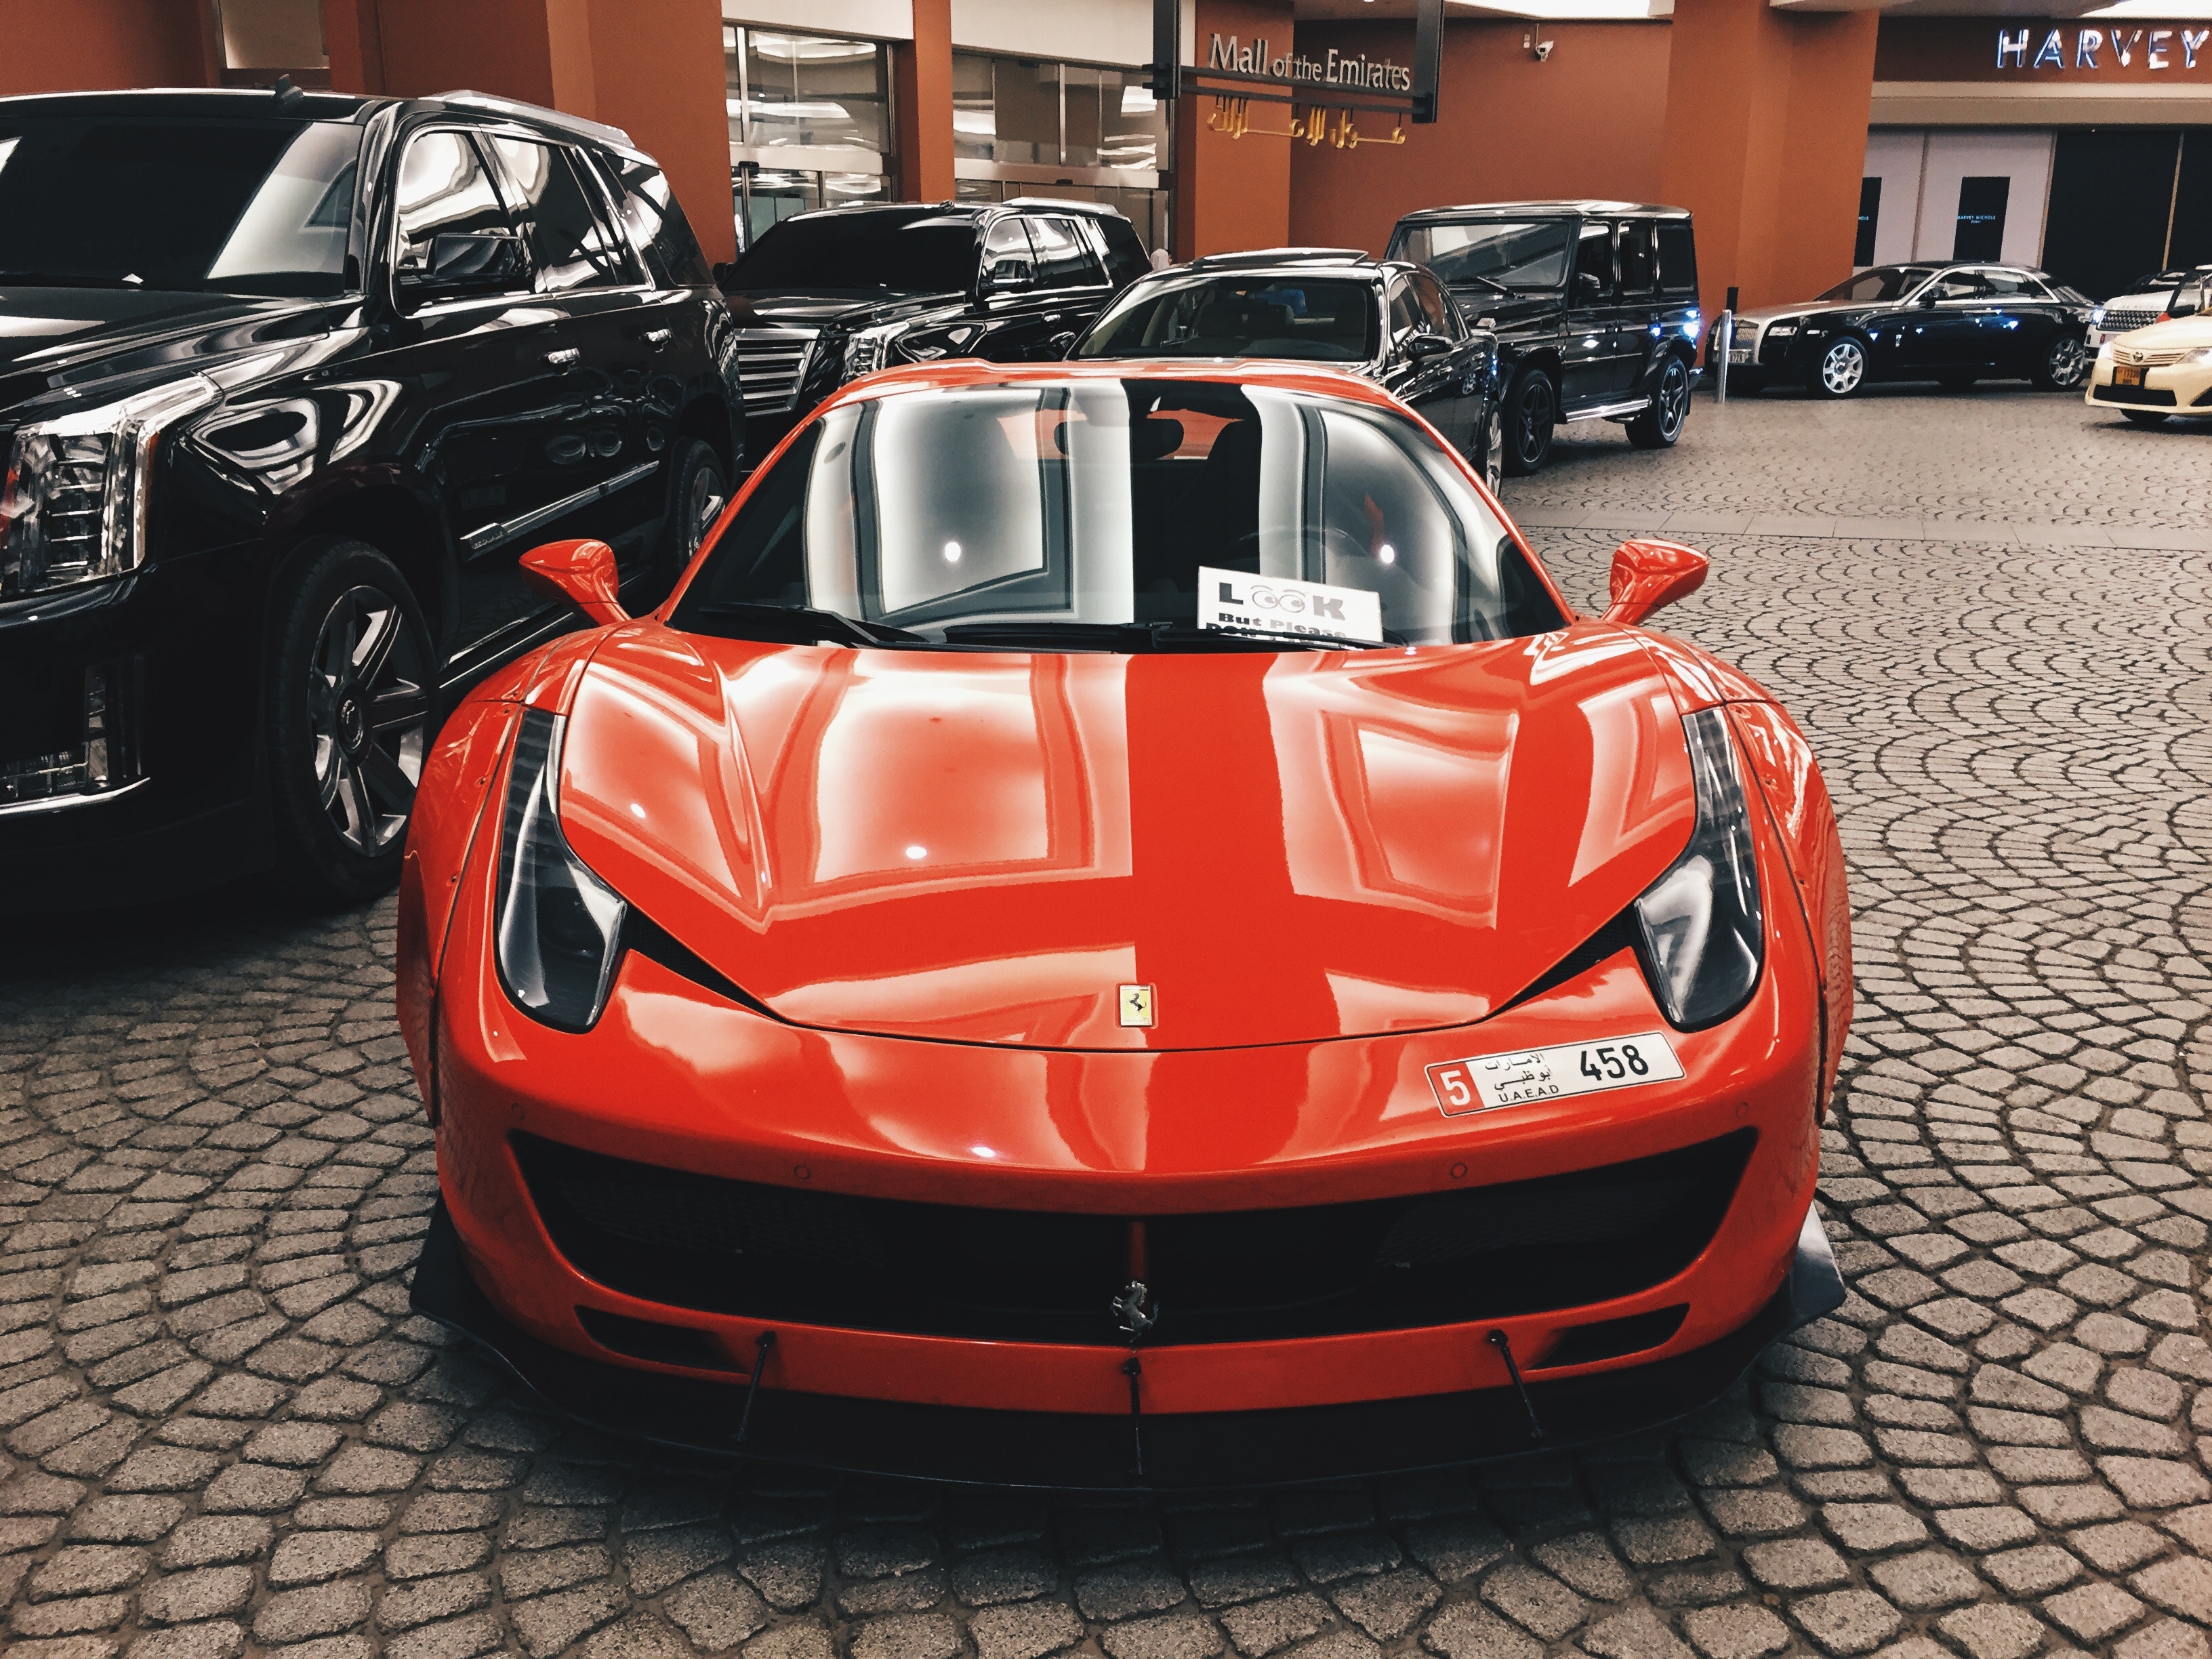 Red Ferrari, Auto, Pavement, Windows, Wheels, HQ Photo